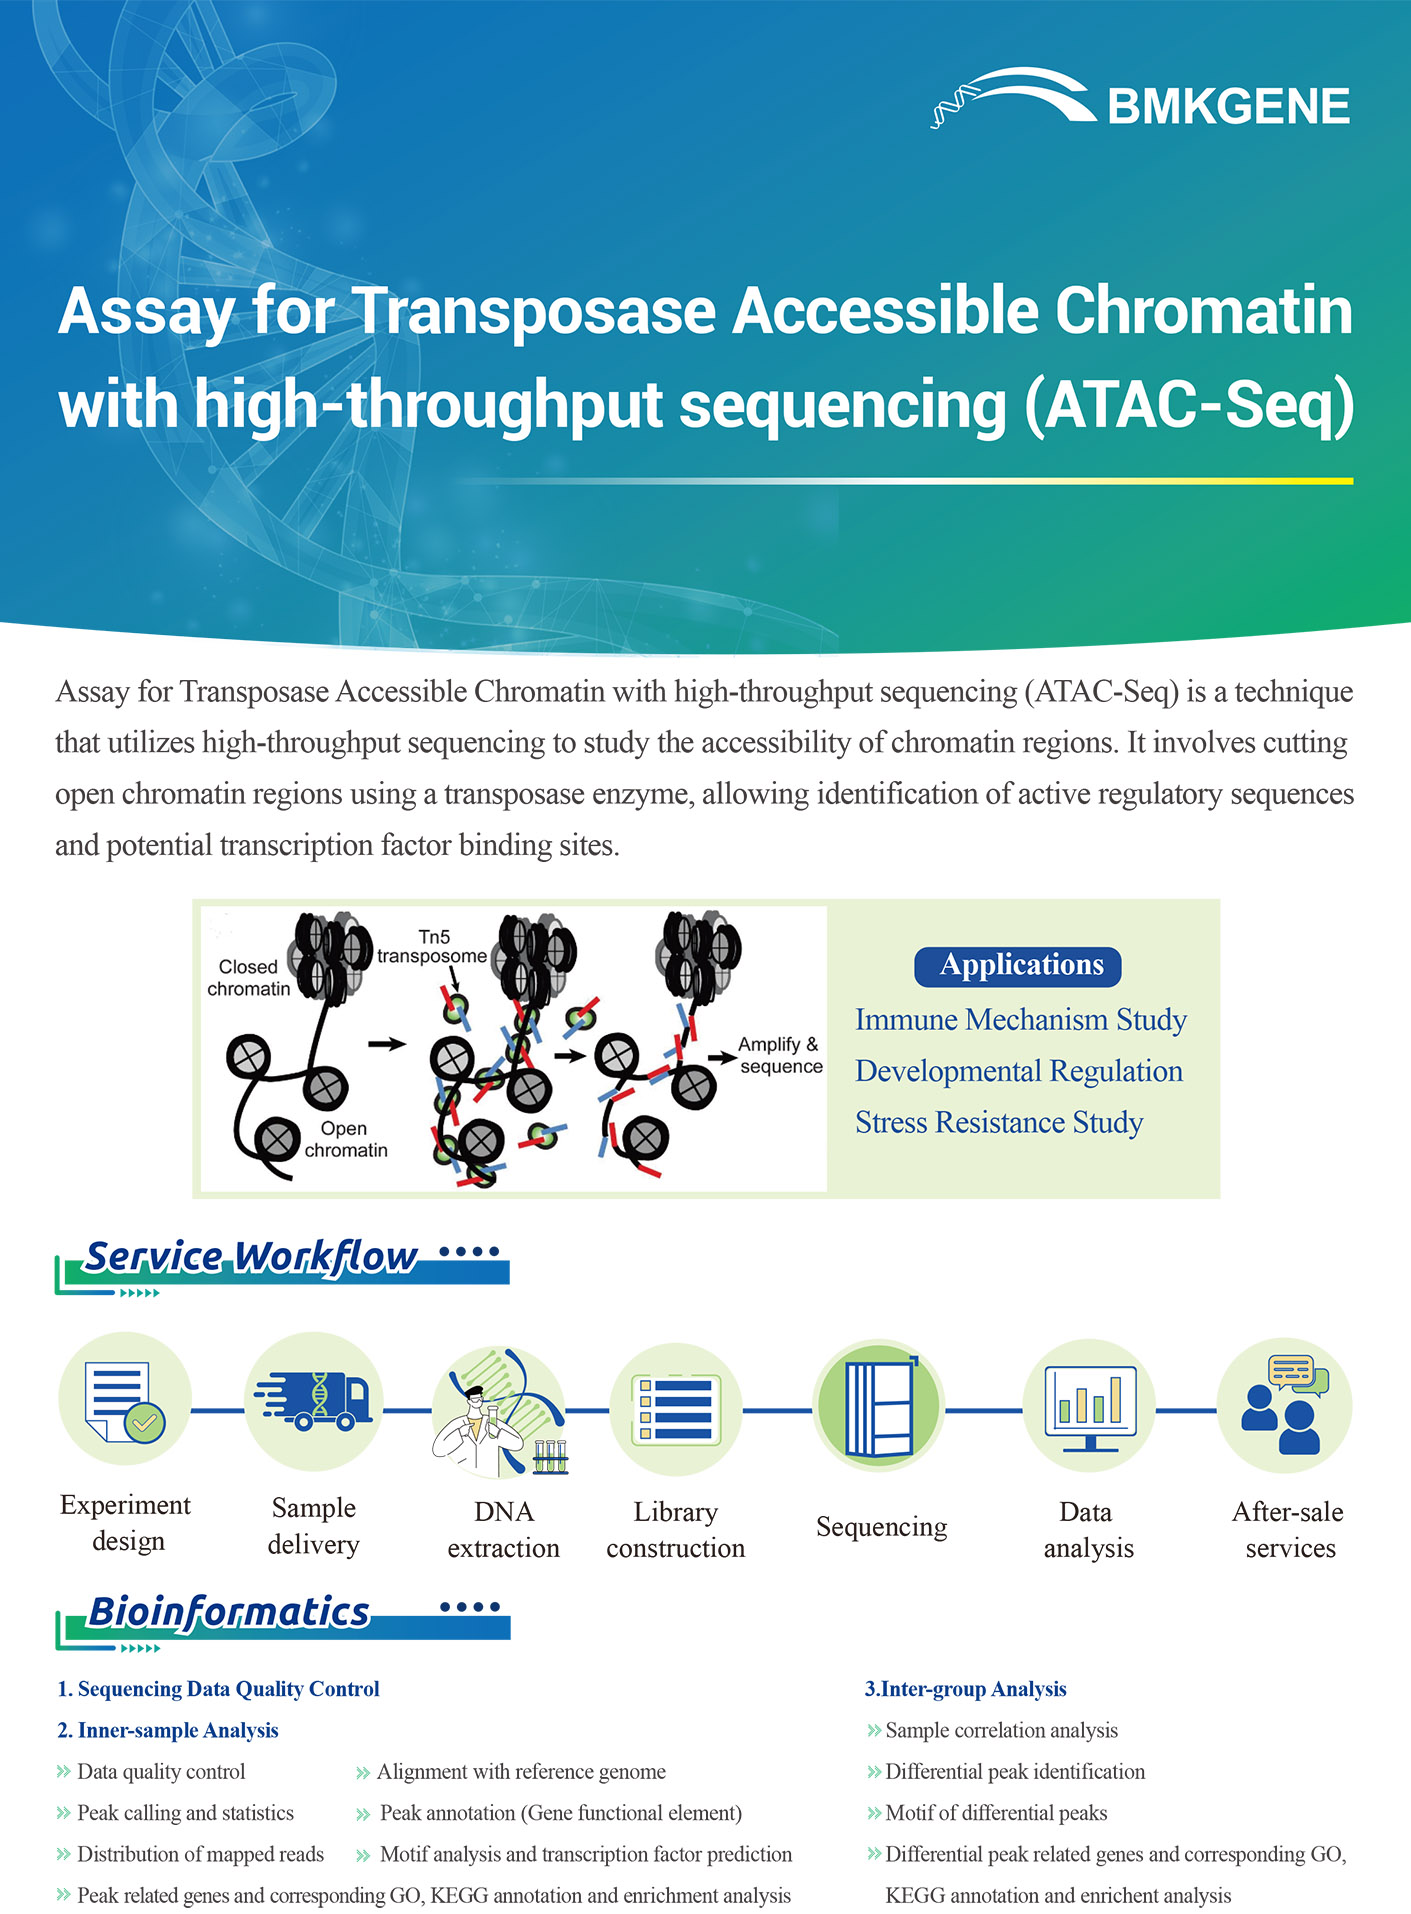 https://www.bmkgene.com/uploads/Assay-for-Transposase-Accessible-Chromatin-with-high-throughput-sequencing-ATAC-Seq-BMKGENE-2310.pdf